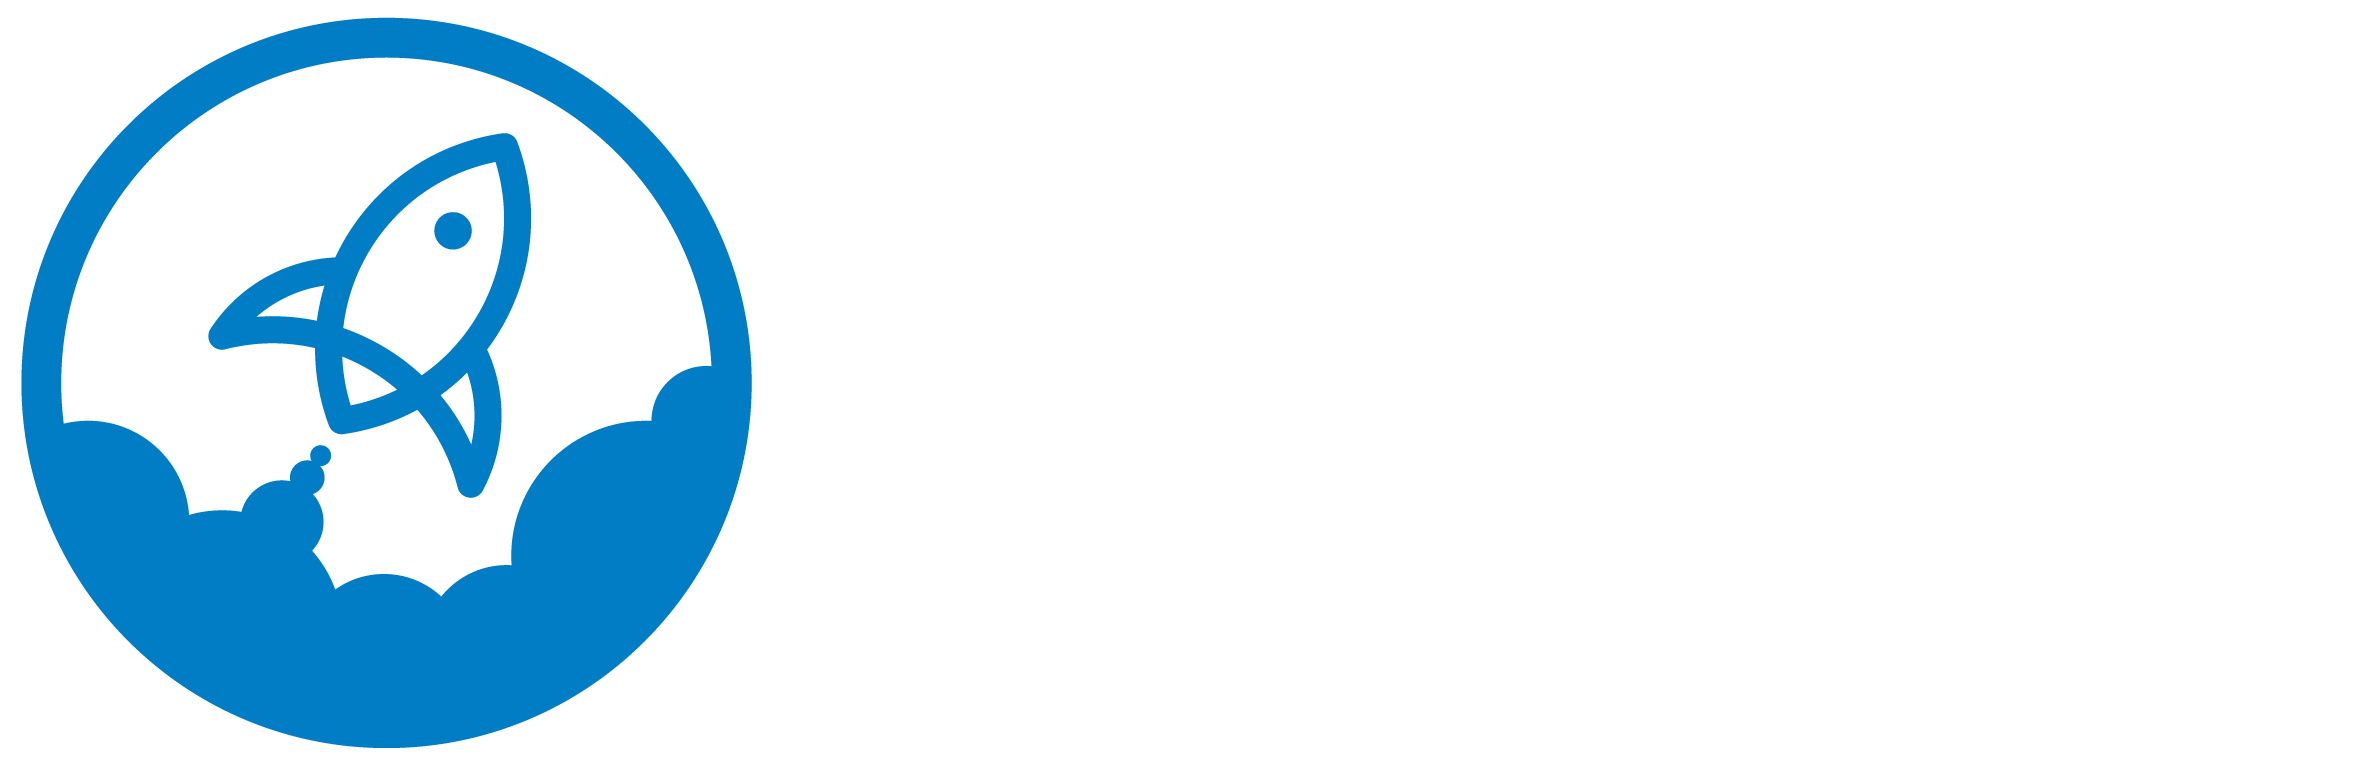 https://websitefuel.ai/wp-content/uploads/2021/02/website-fuel-logo-new.png